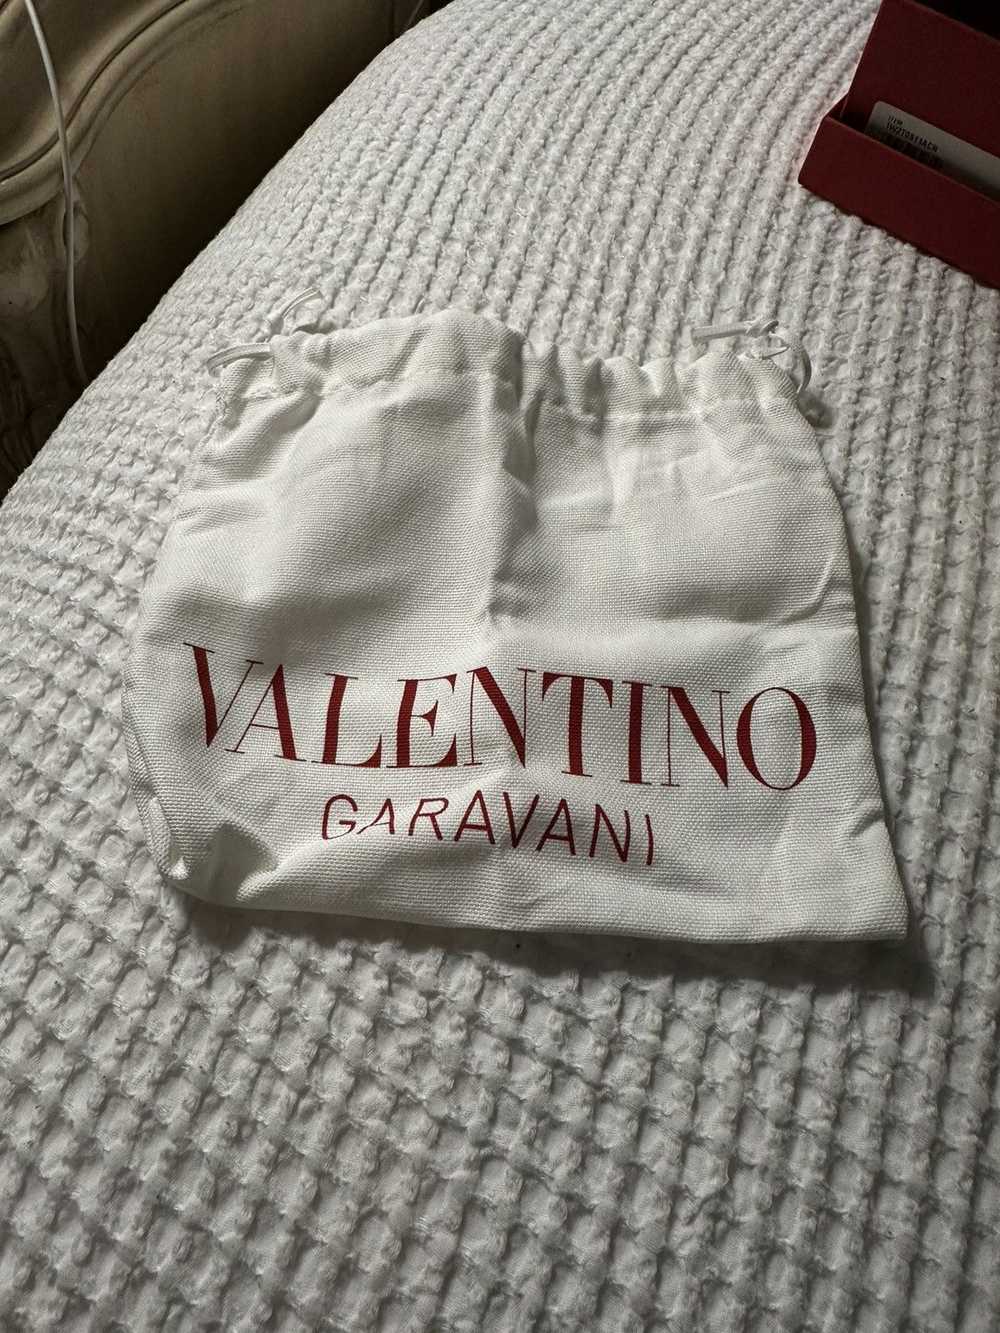 Valentino Garavani Valentino Belt - image 1